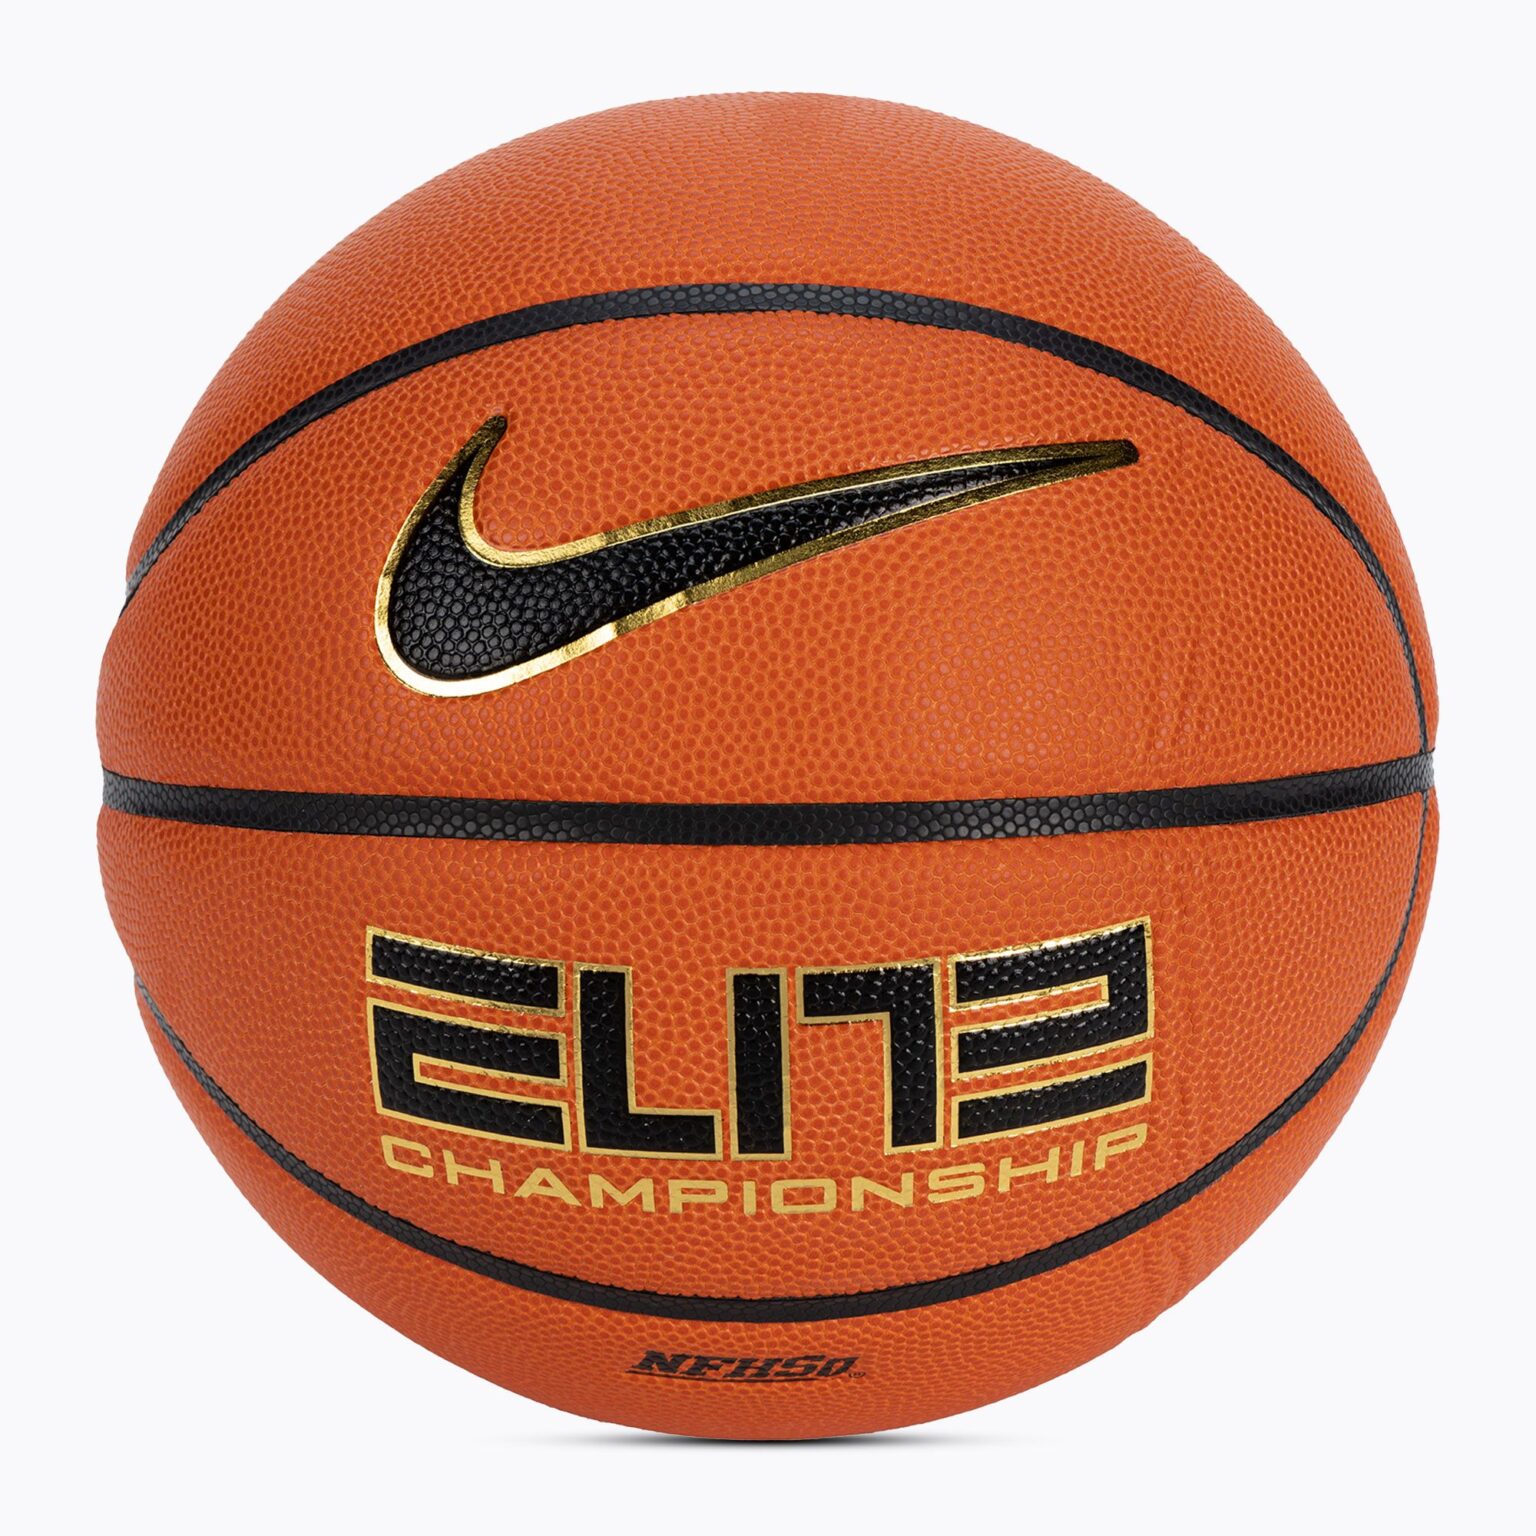 Piłka do koszykówki Nike Elite Championship 8P 2.0 Deflated amber/black/metallic gold rozmiar 6